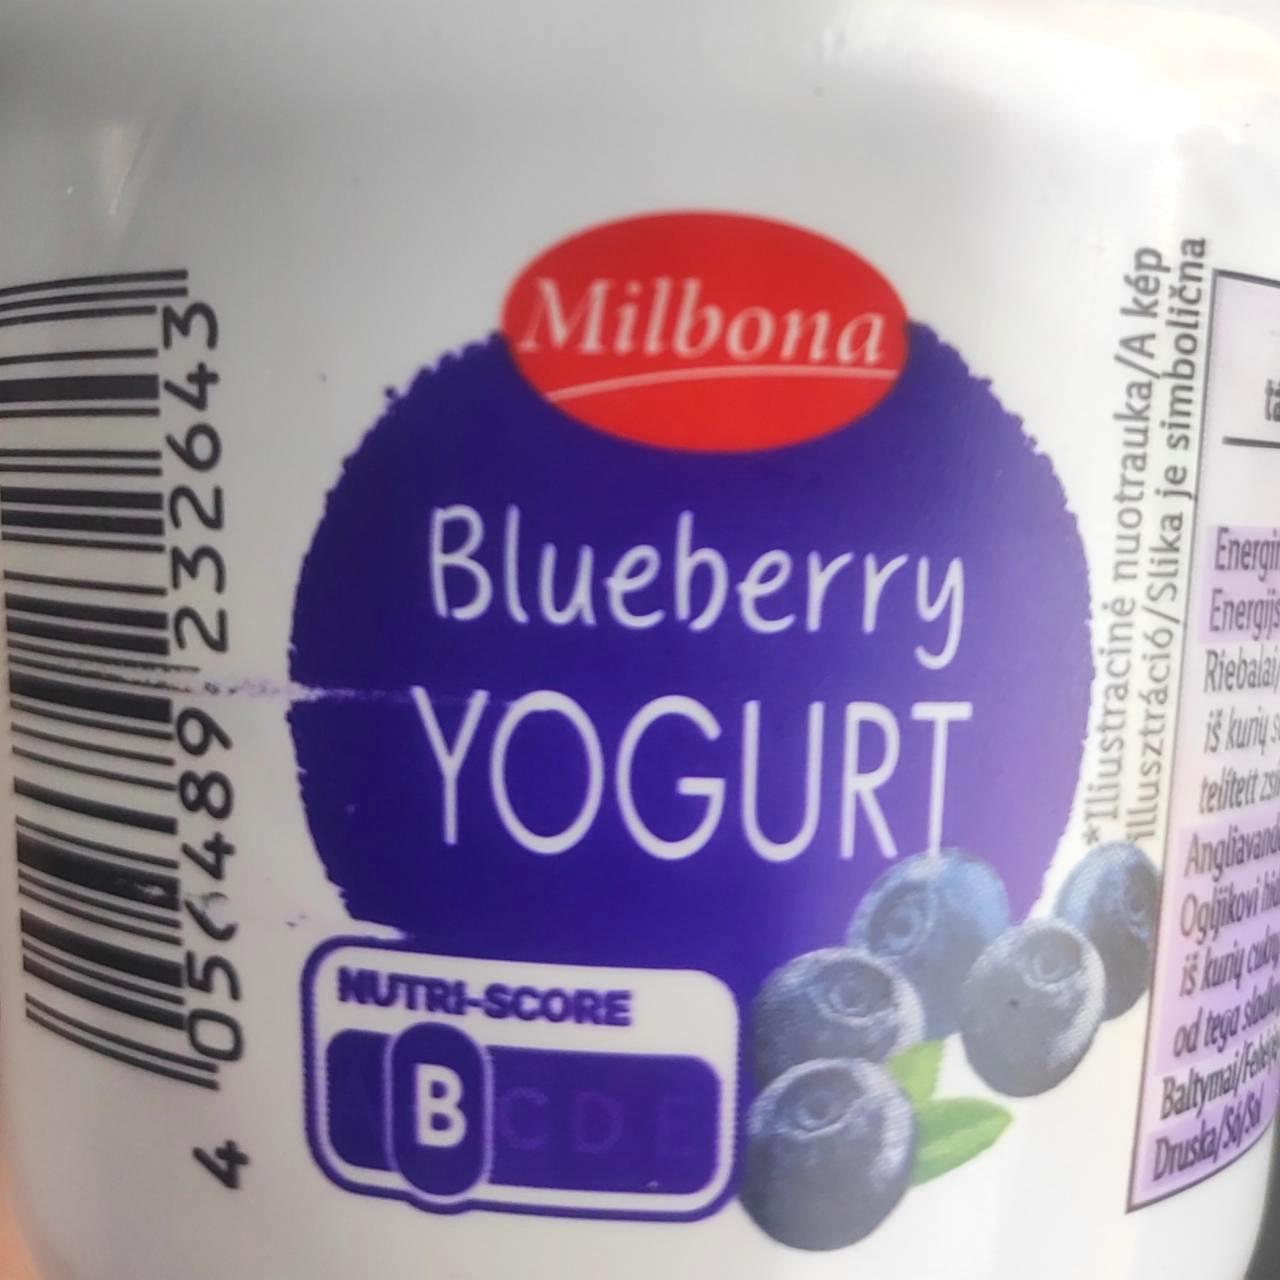 Képek - Blueberry yogurt Milbona